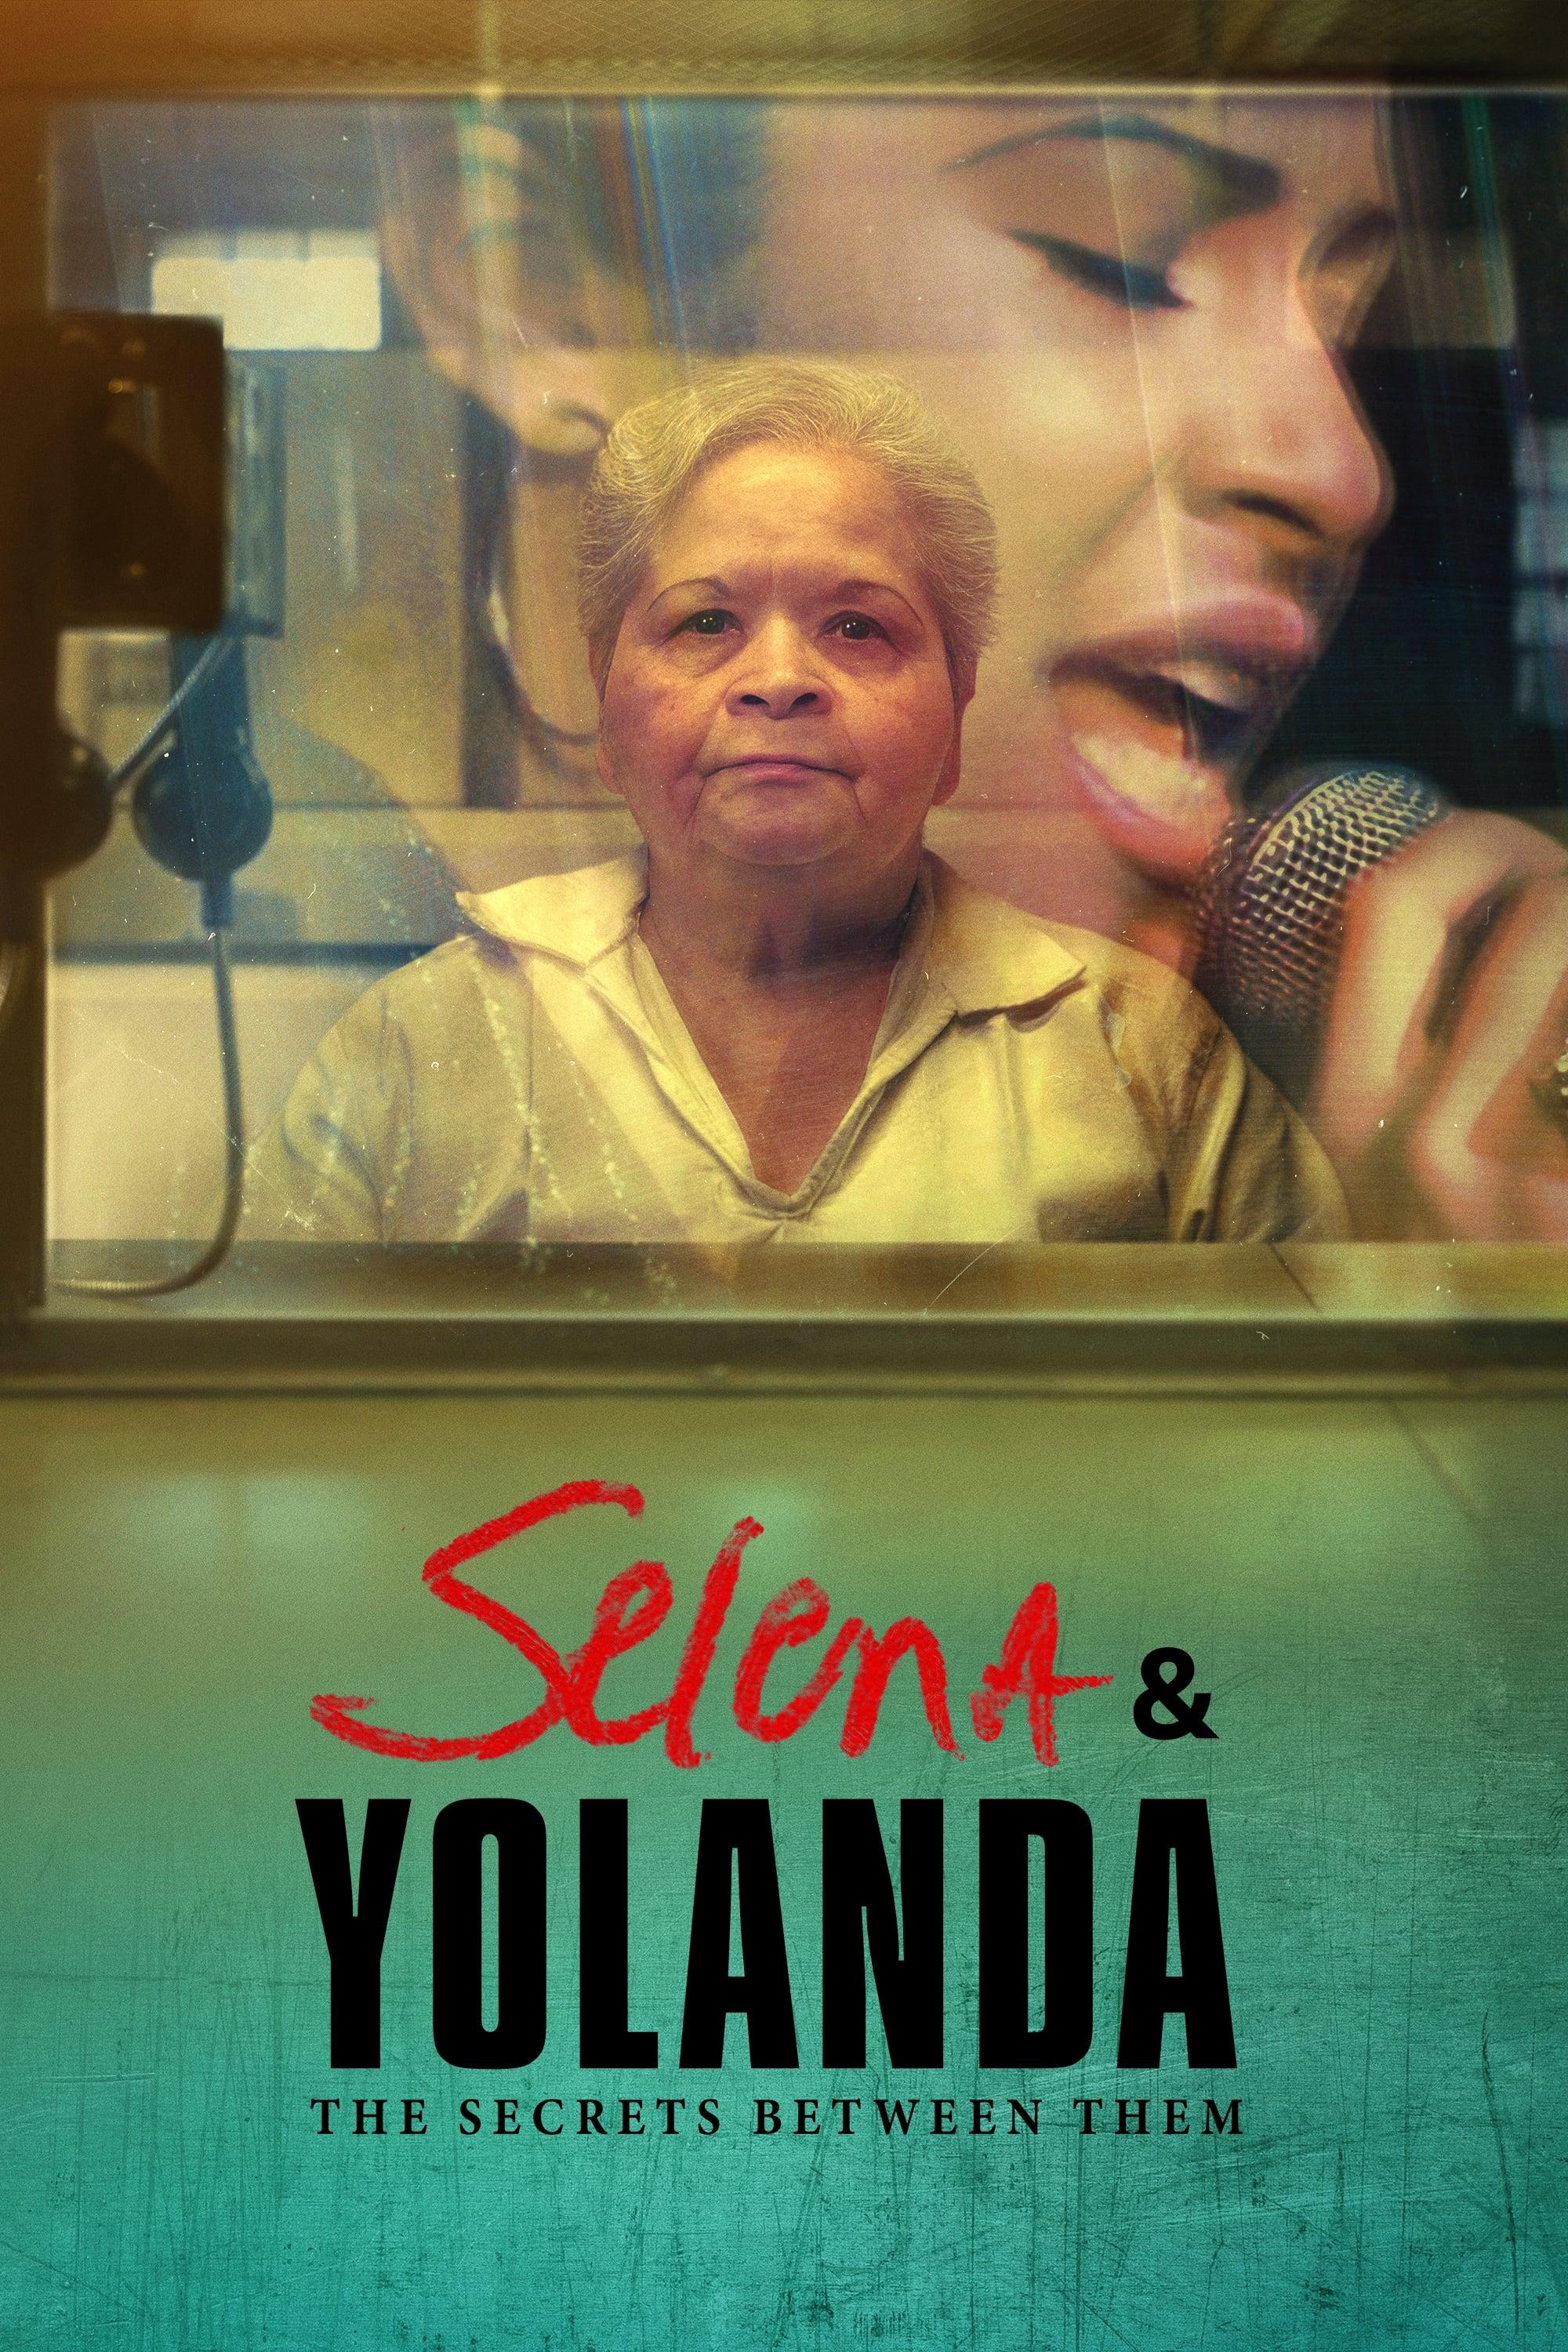 Selena & Yolanda: The Secrets Between Them poster